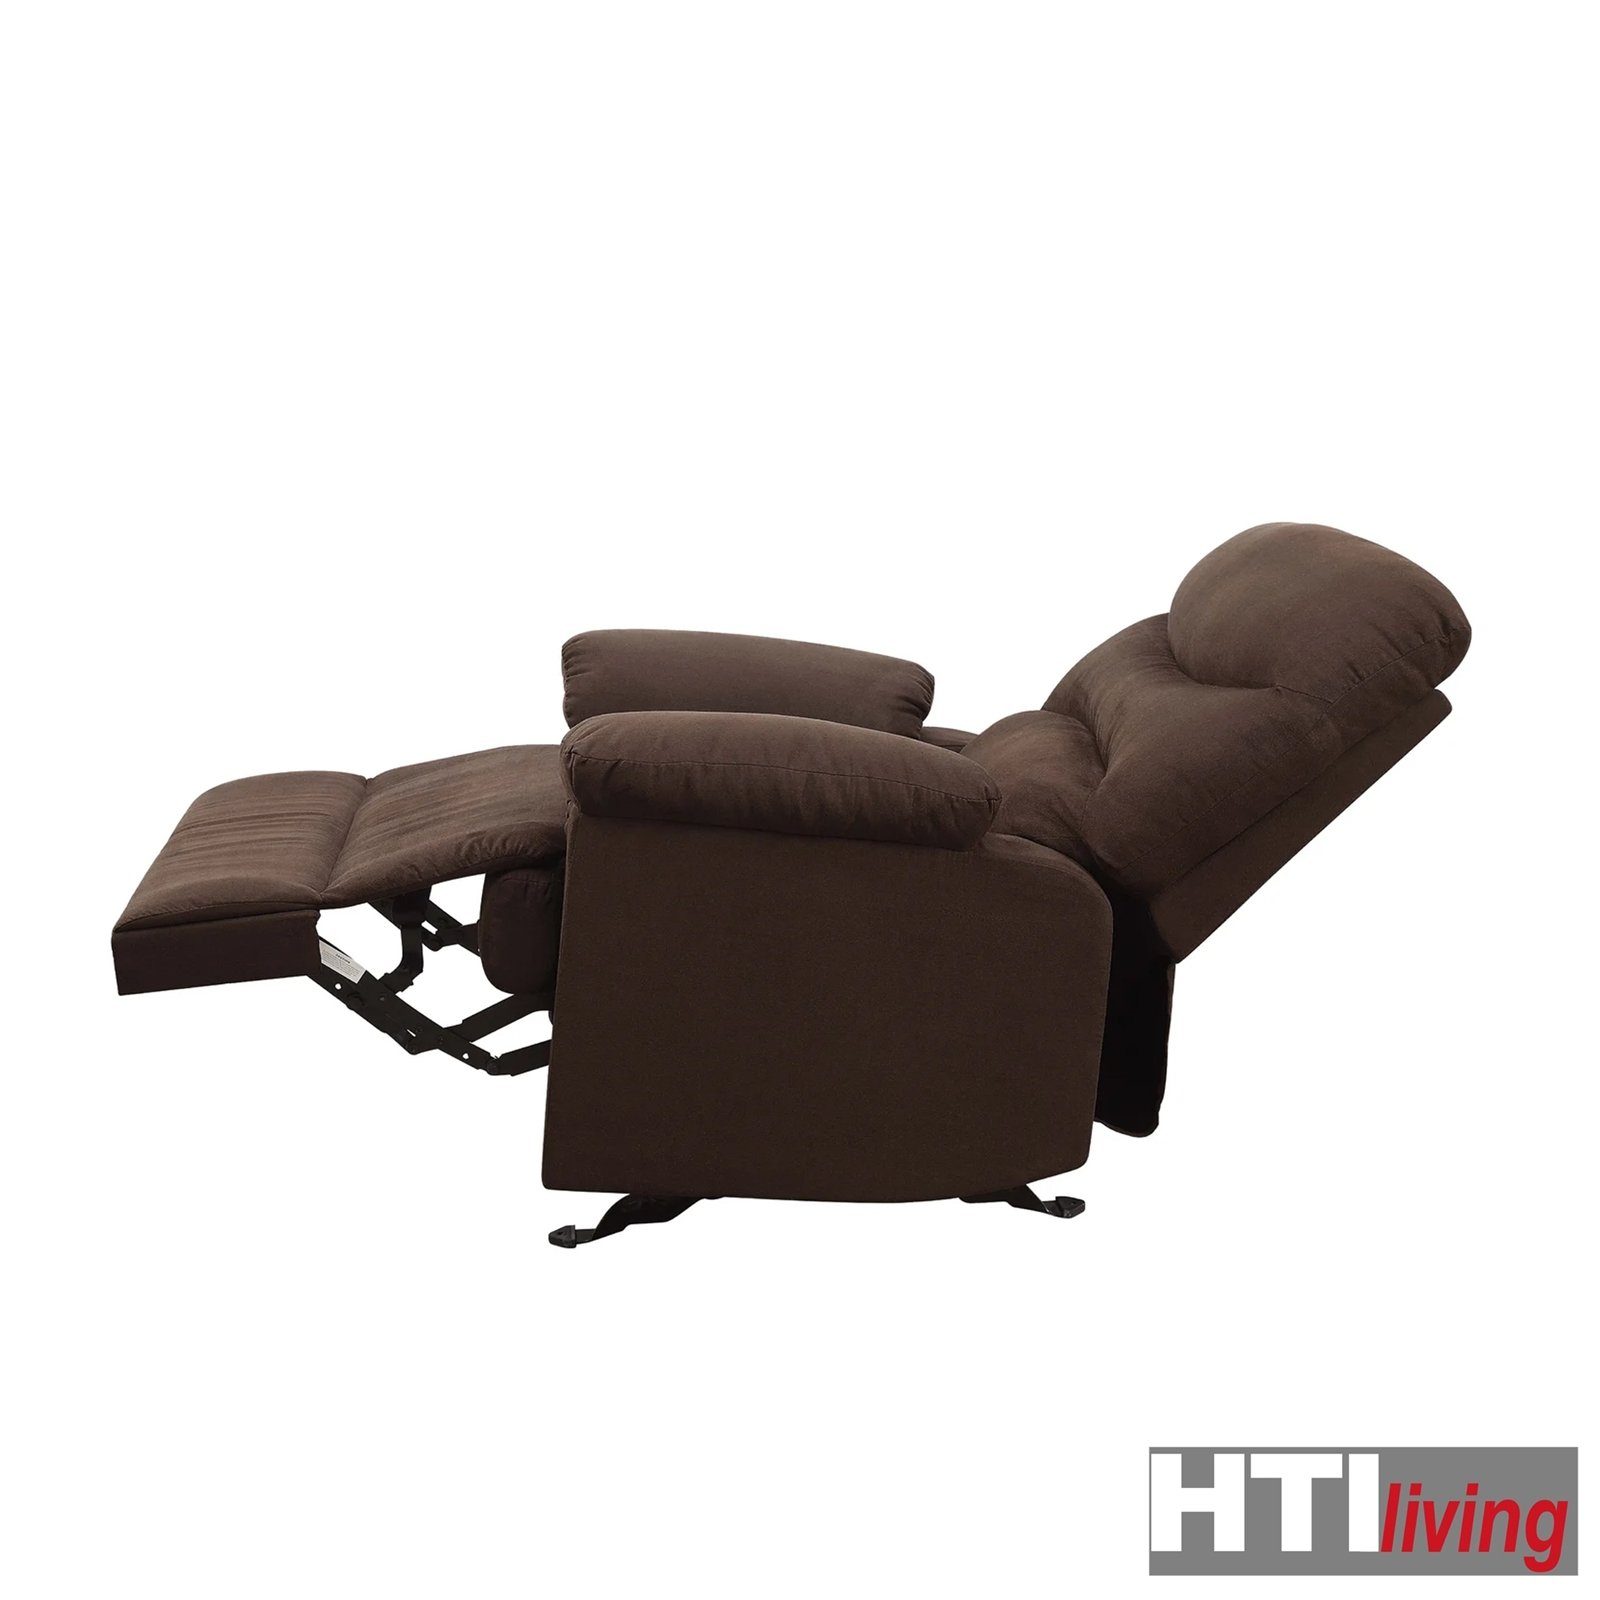 TV-Sessel Tronitz Relaxfunktion, manueller Relaxsessel HTI-Living mit Sessel